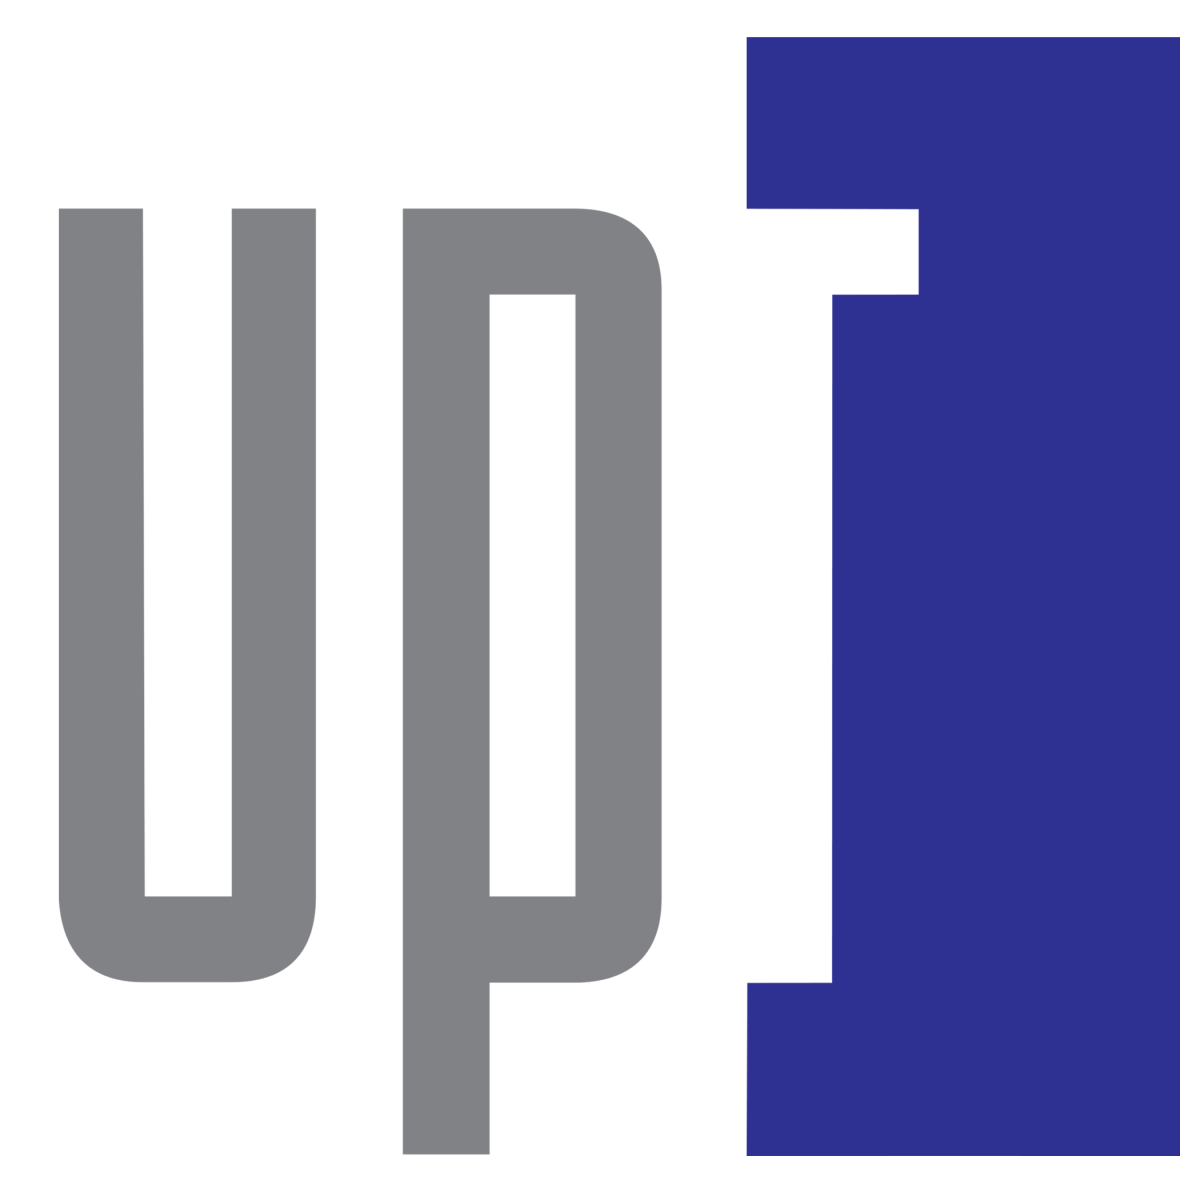 UPT logo